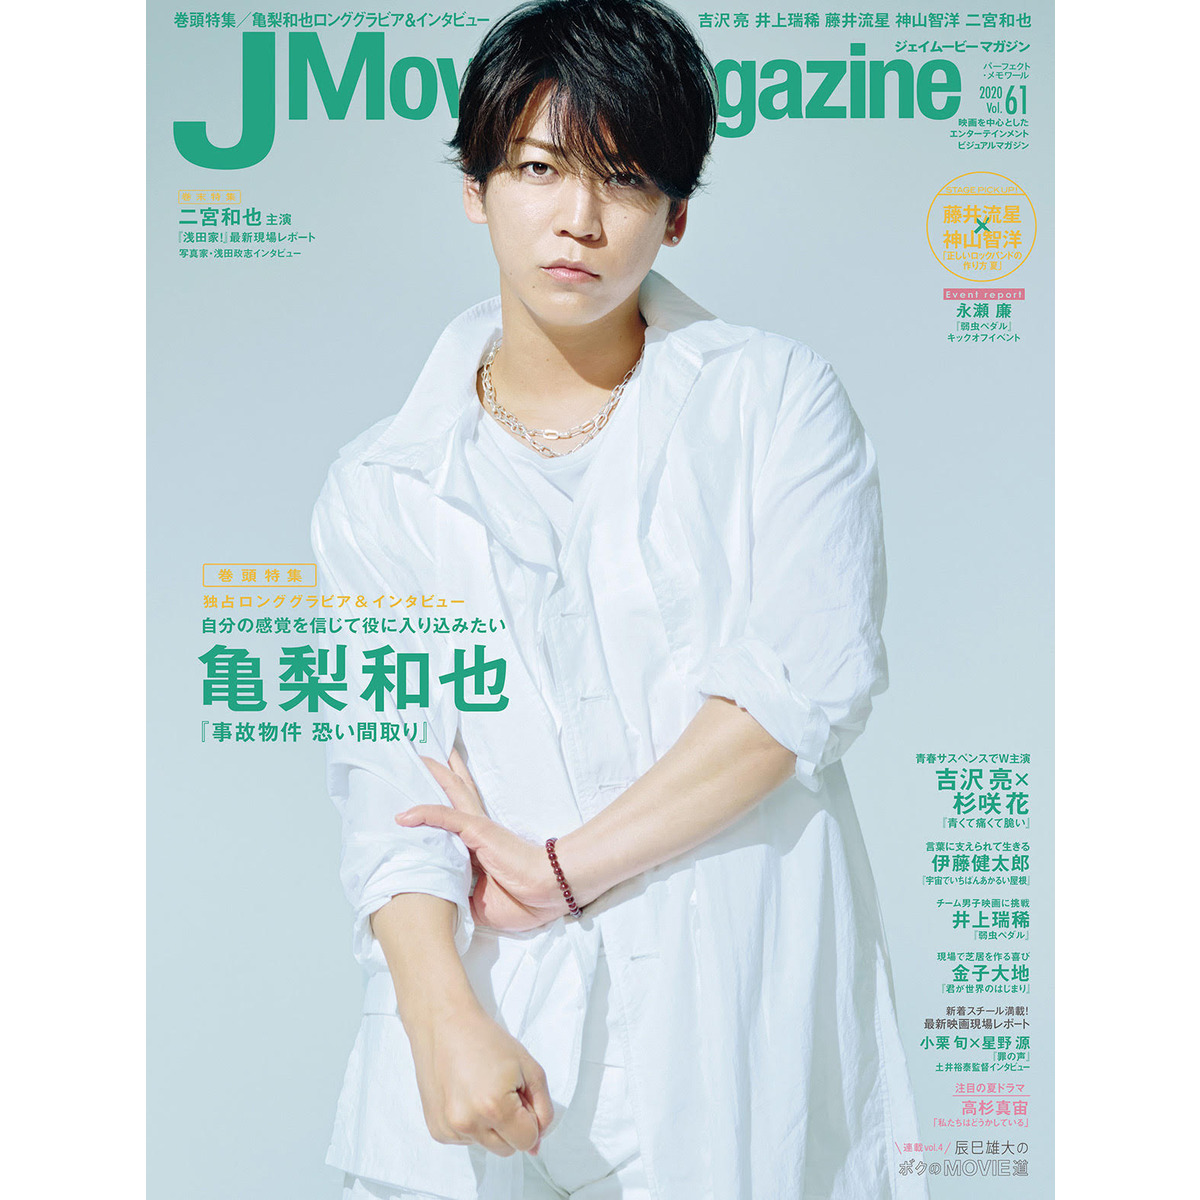 J Movie Magazine Vol.61【表紙:亀梨和也『事故物件 恐い間取り